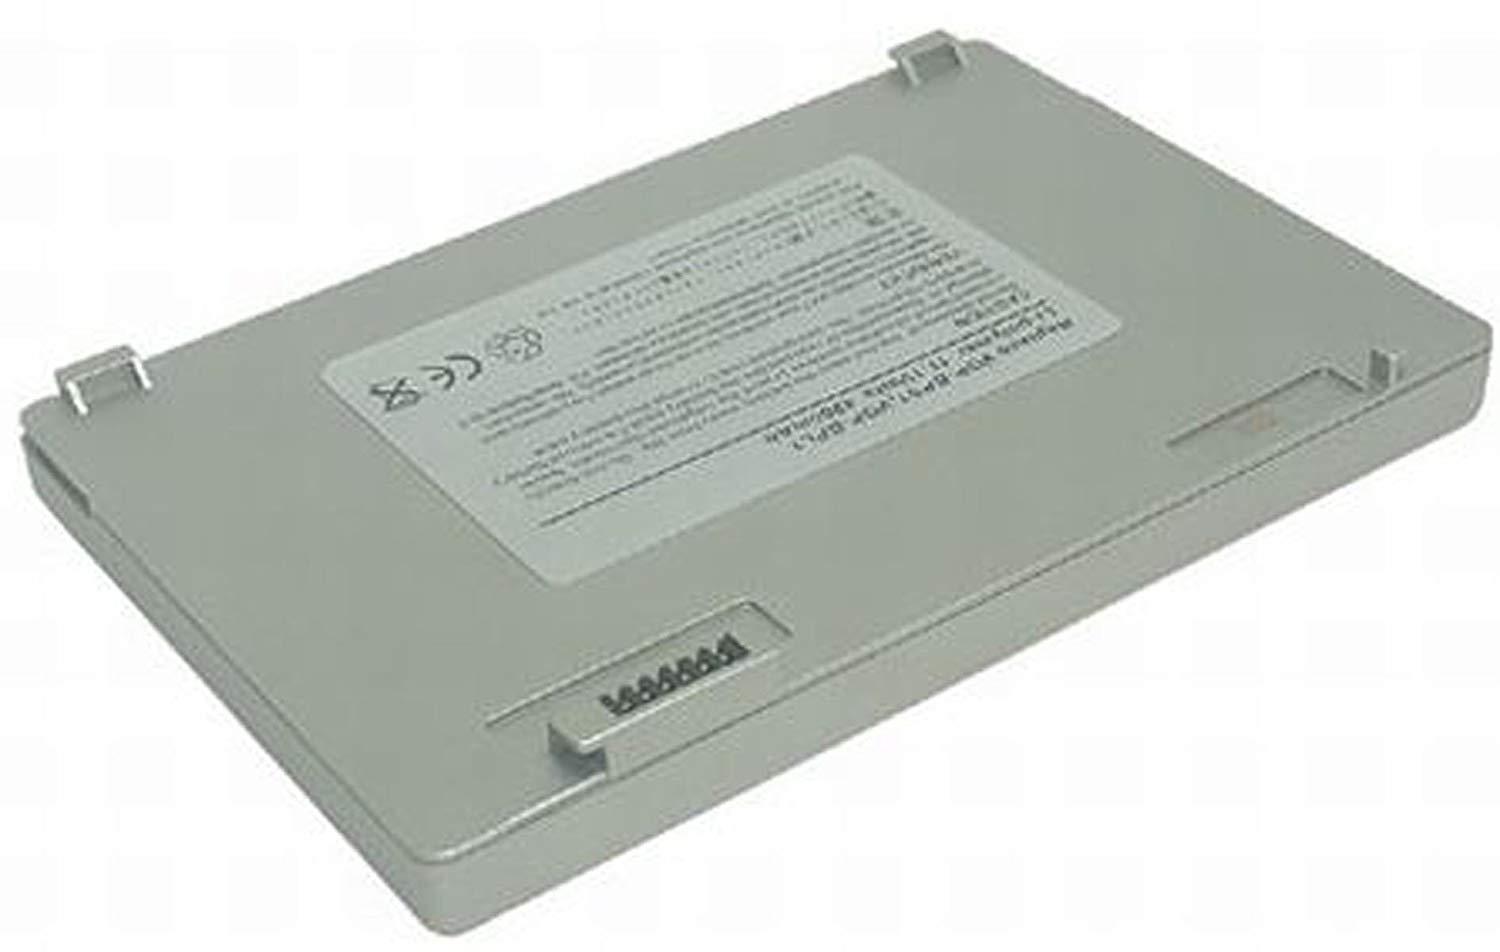 Sony VAIO PCG-505SX/4G, VGN-U70, VGP-BPL1,VGP-BPS1,VGN-U50,VGN-U70 Laptop Battery - eBuy UAE